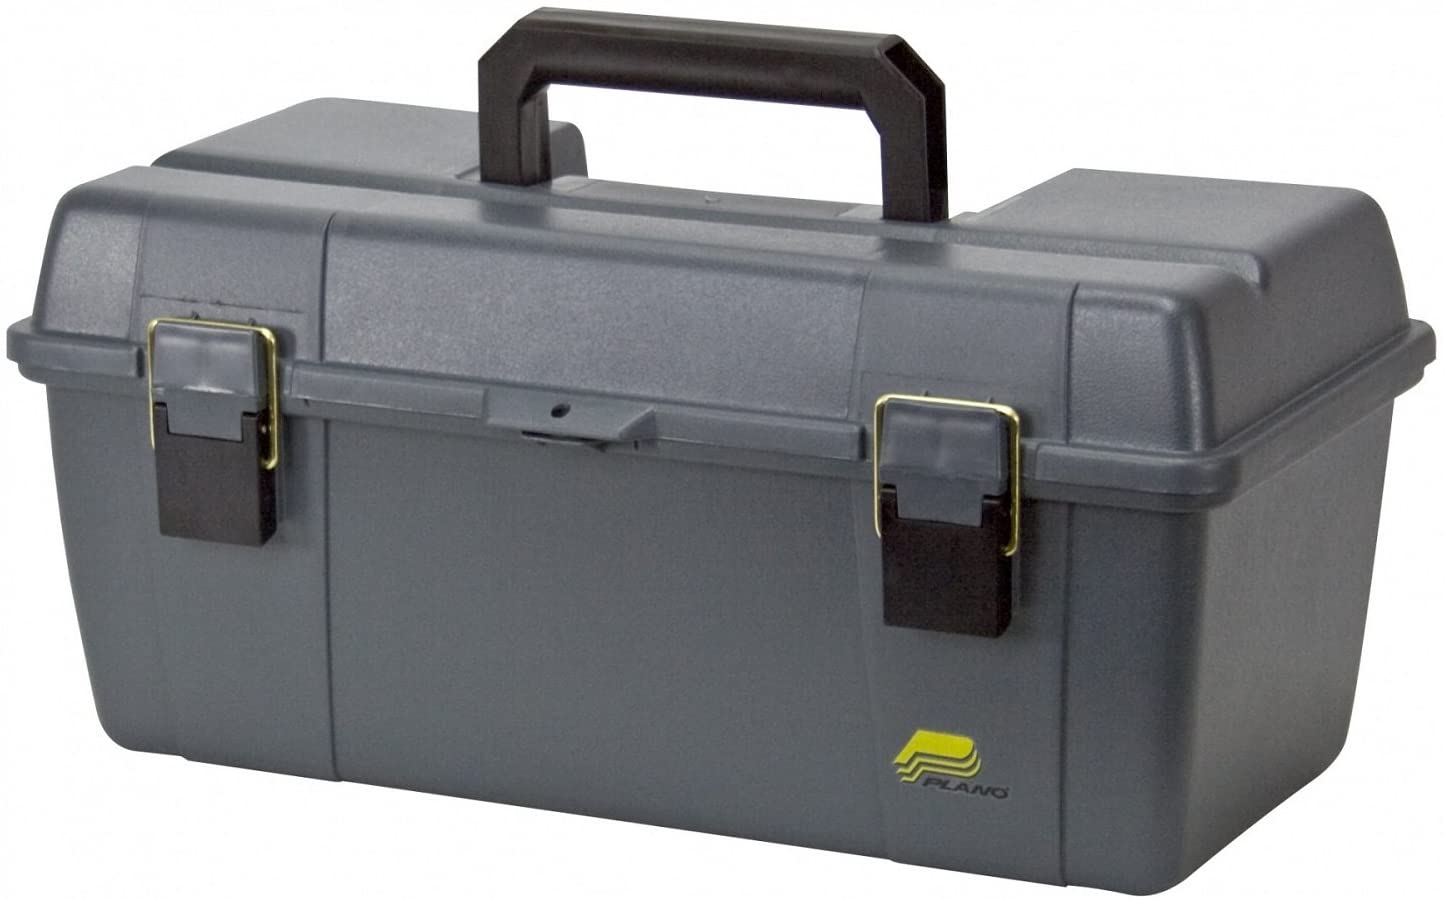 Plano 651-010 Portable Organizing Tool Box